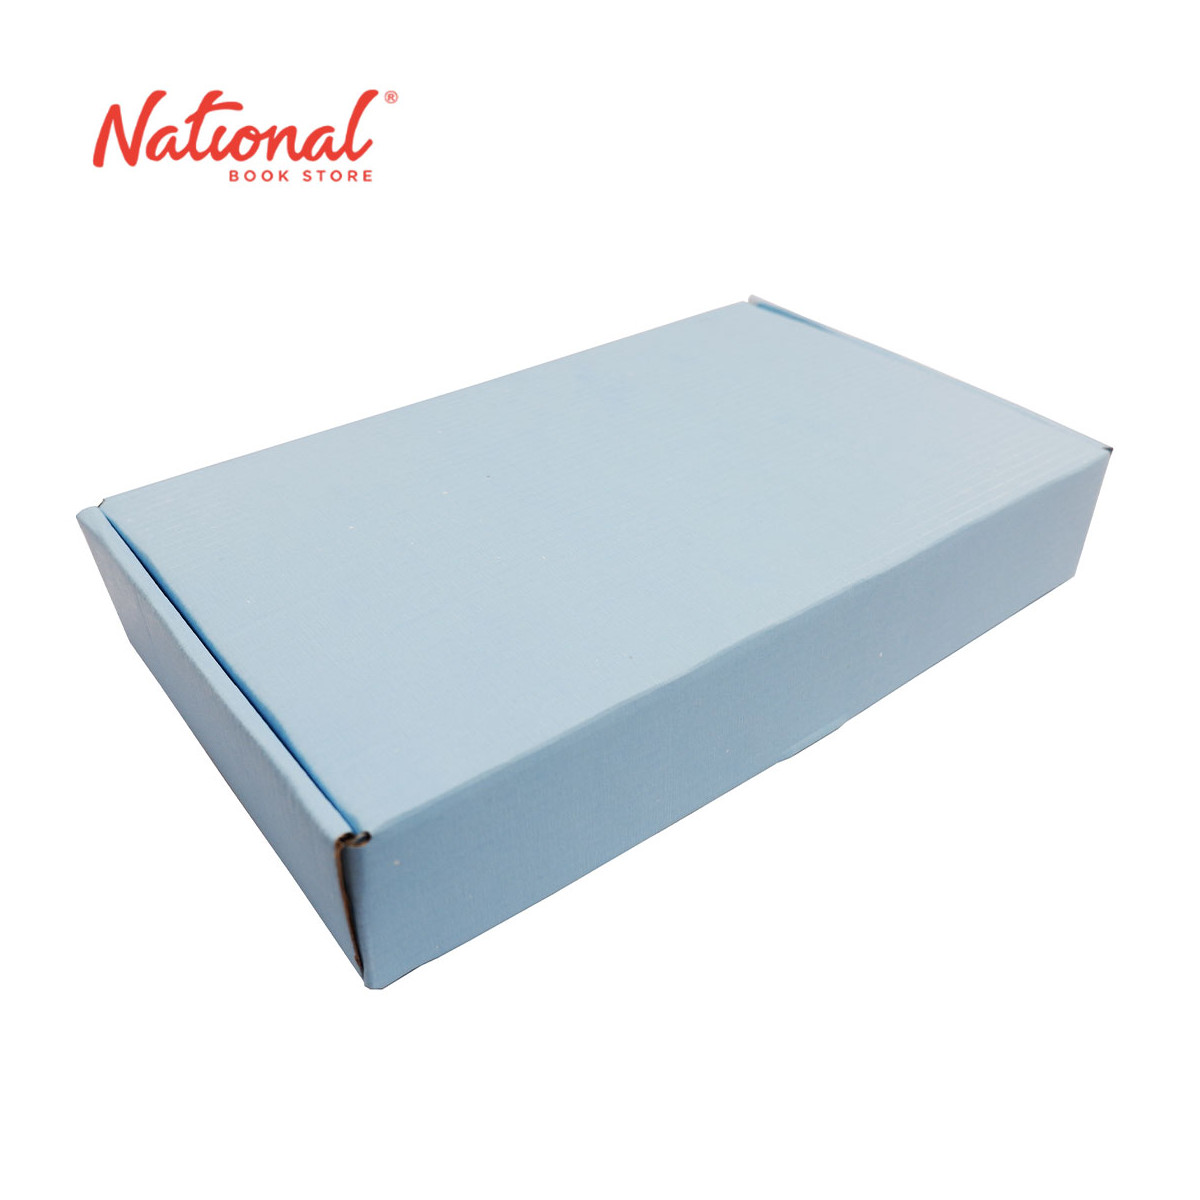 Mailer Box 265x160x47mm, Light Blue (Upgrade Your Packaging) - Packaging Supplies